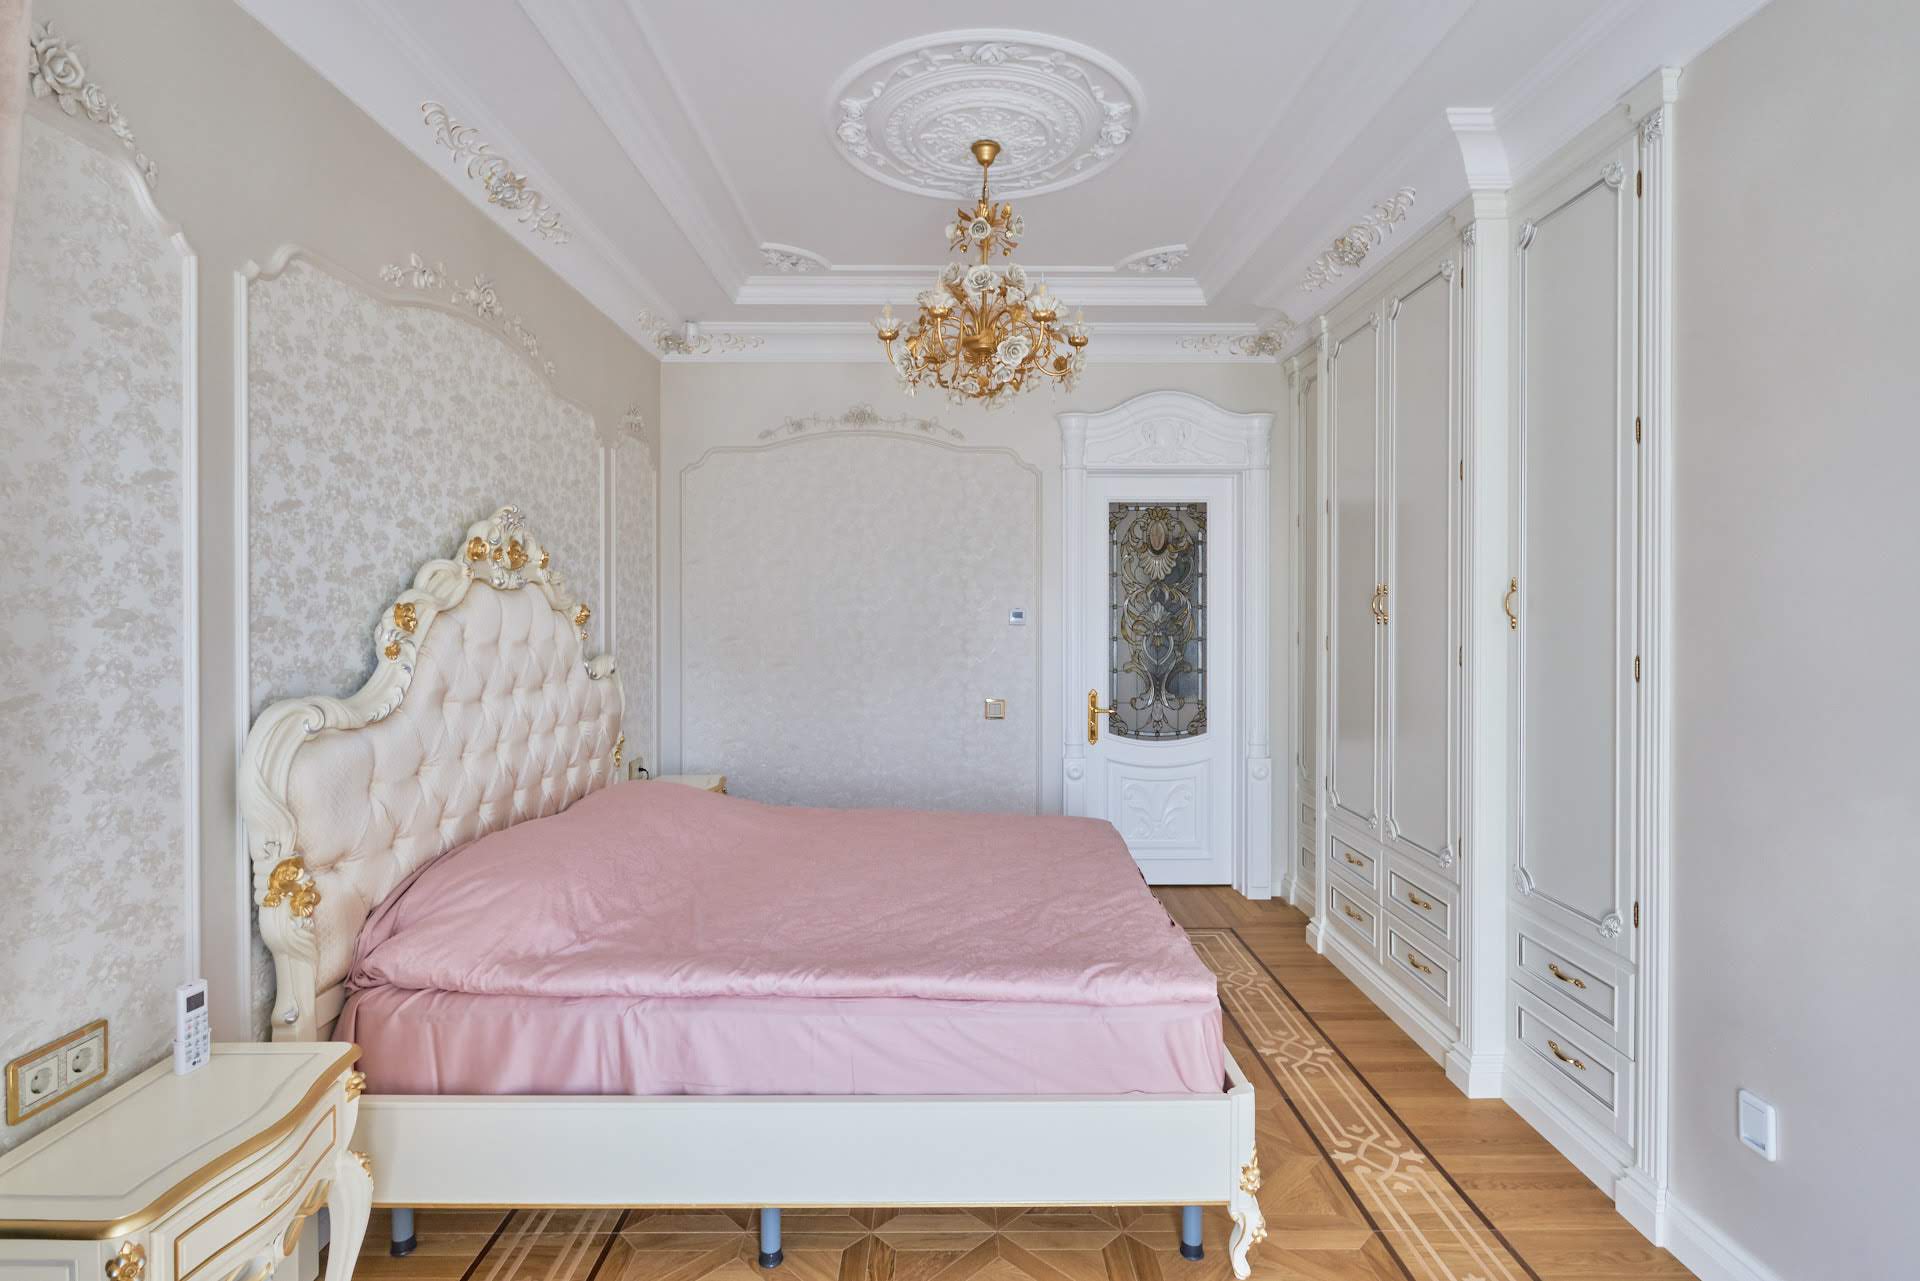 Bedroom interior design